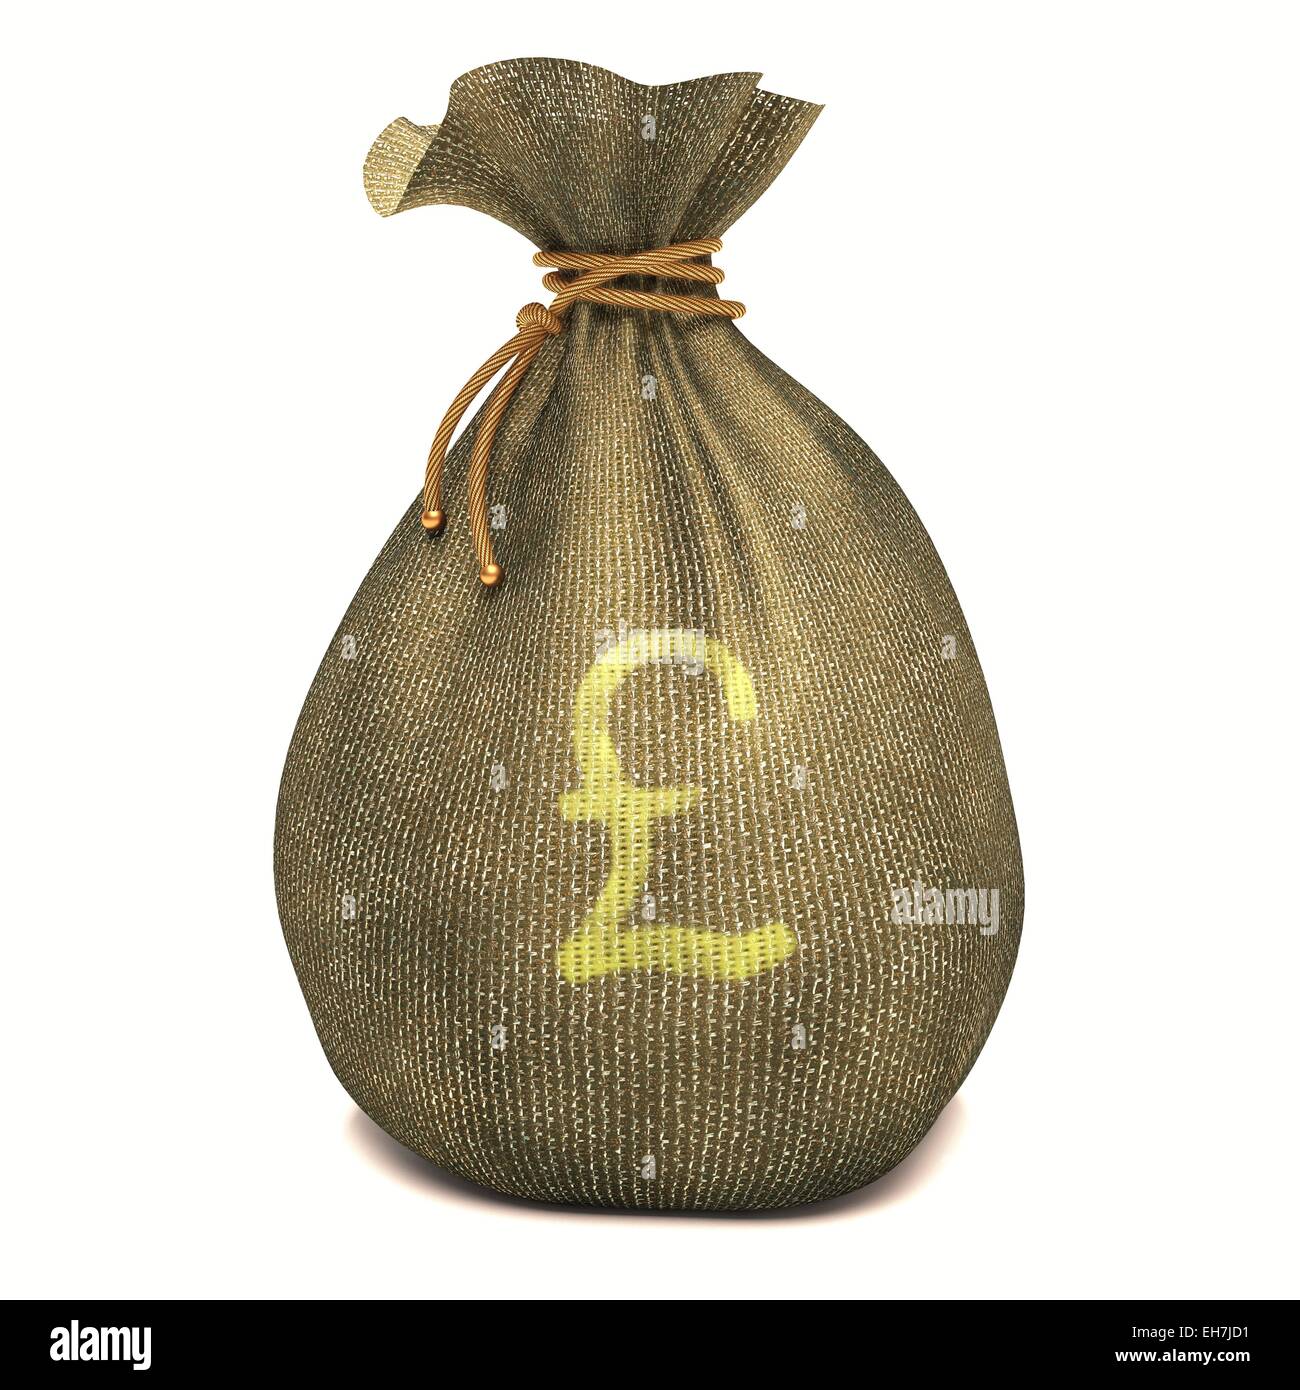 Bag with British pound sign, illustration Stock Photo